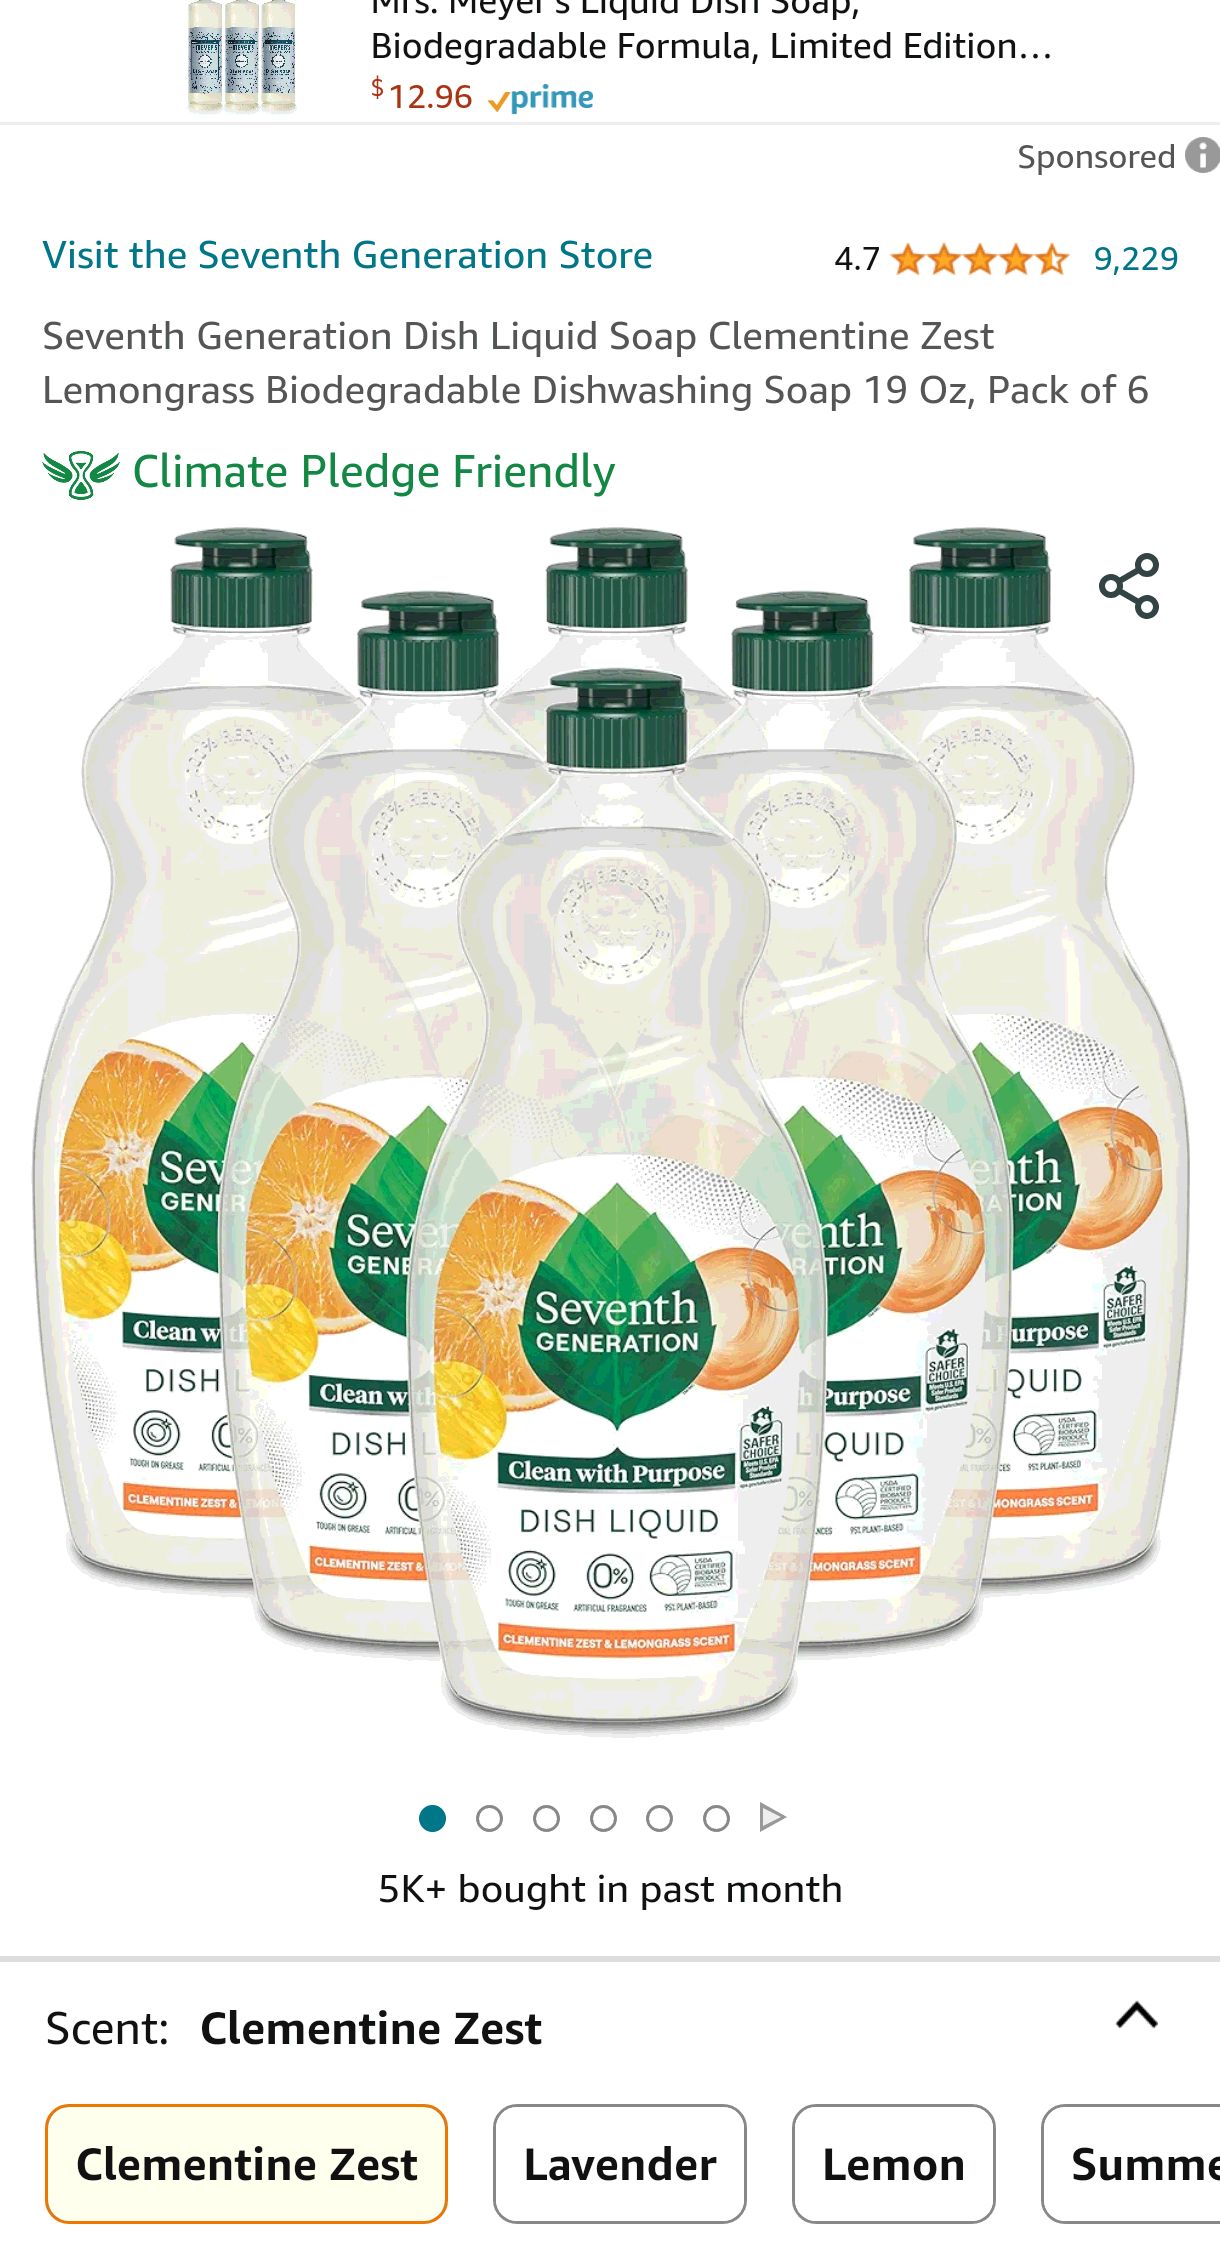 Seventh Generation Dish Liquid Soap Clementine Zest Lemongrass Biodegradable Dishwashing Soap 19 Oz, Pack of 6 : Health & Household